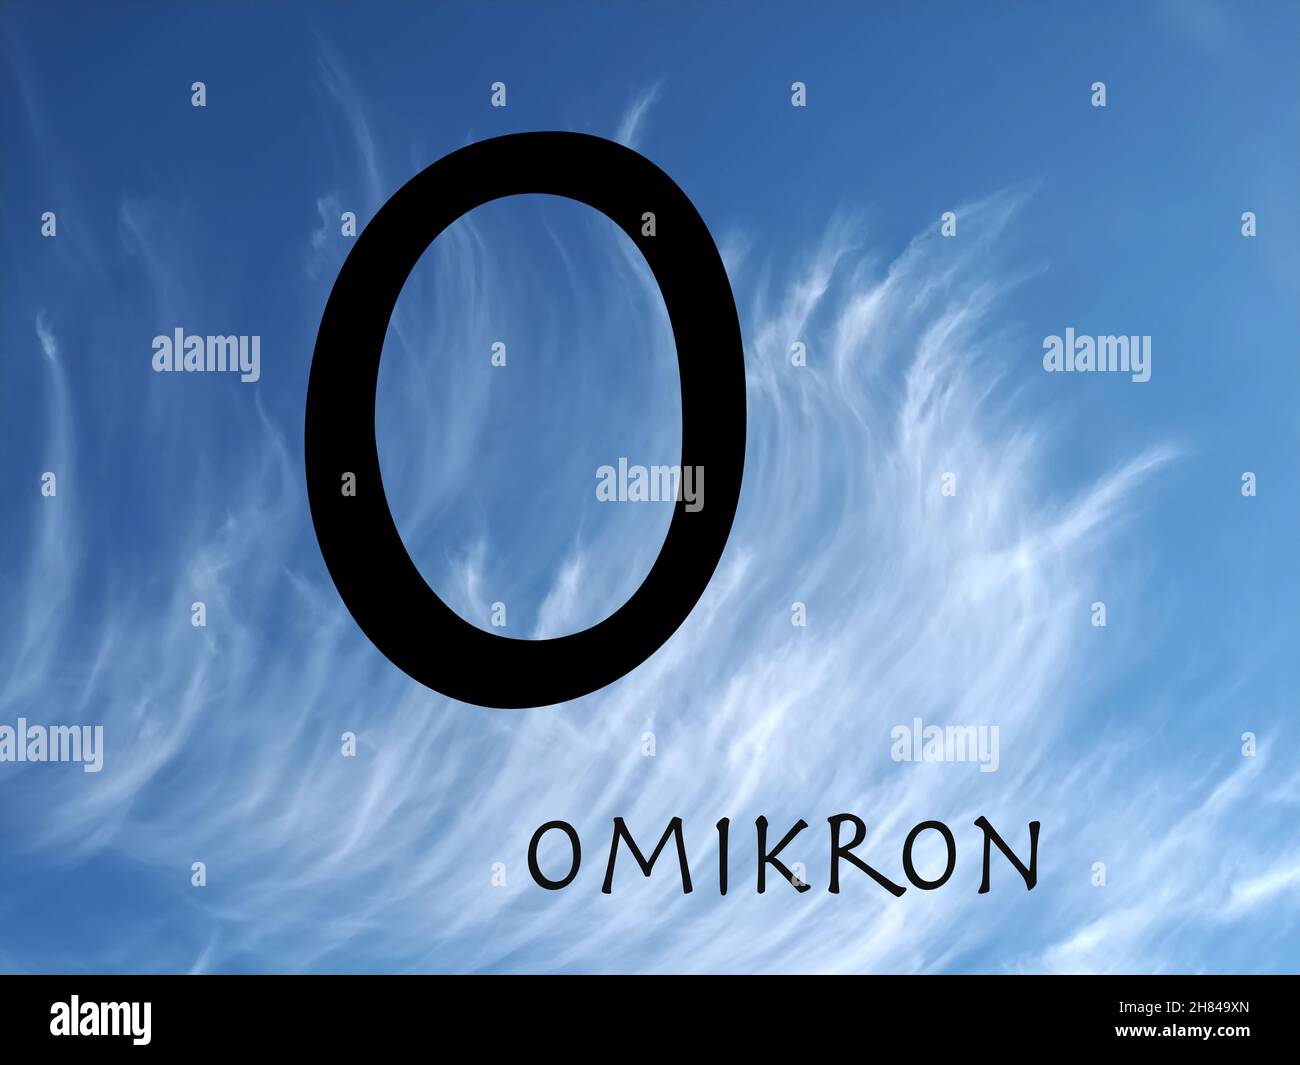 Omikron symbol on cloudy background Stock Photo